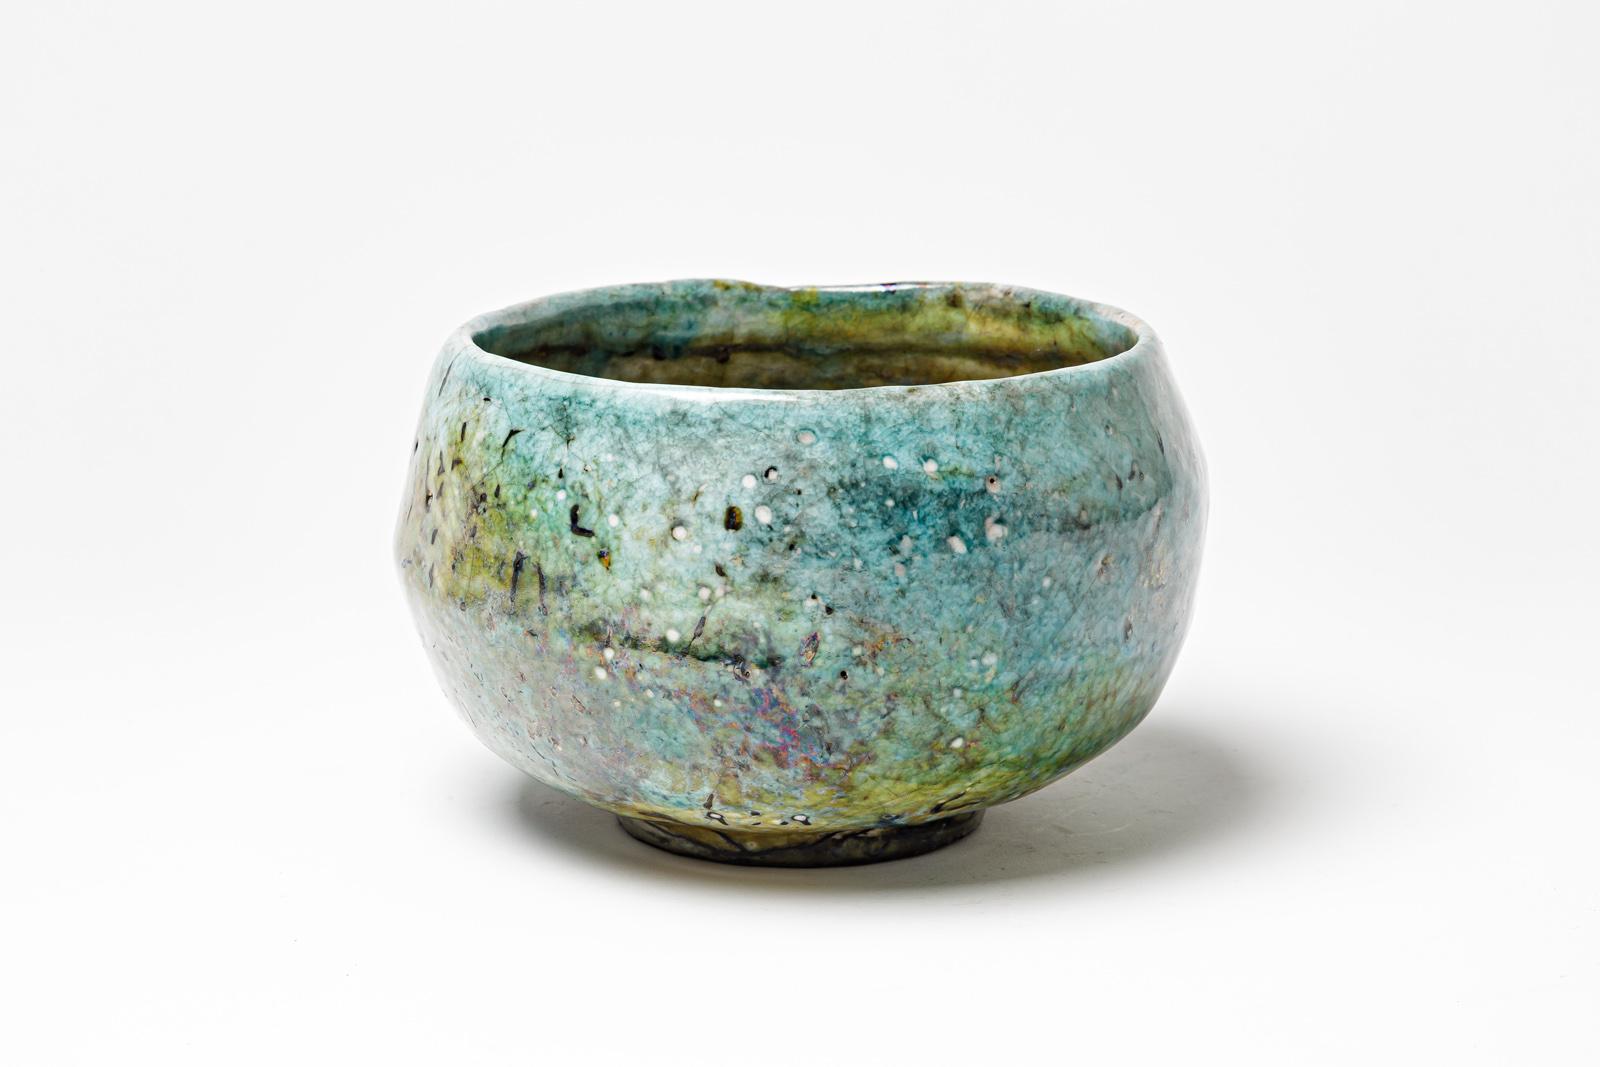 Green and blue glazed ceramic bowl with metallic highlights by Gisèle Buthod Garçon. 
Raku fired. 
Artist monogram under the base. 
Circa 1980-1990.
H : 4.3’ x 6.7’ inches.